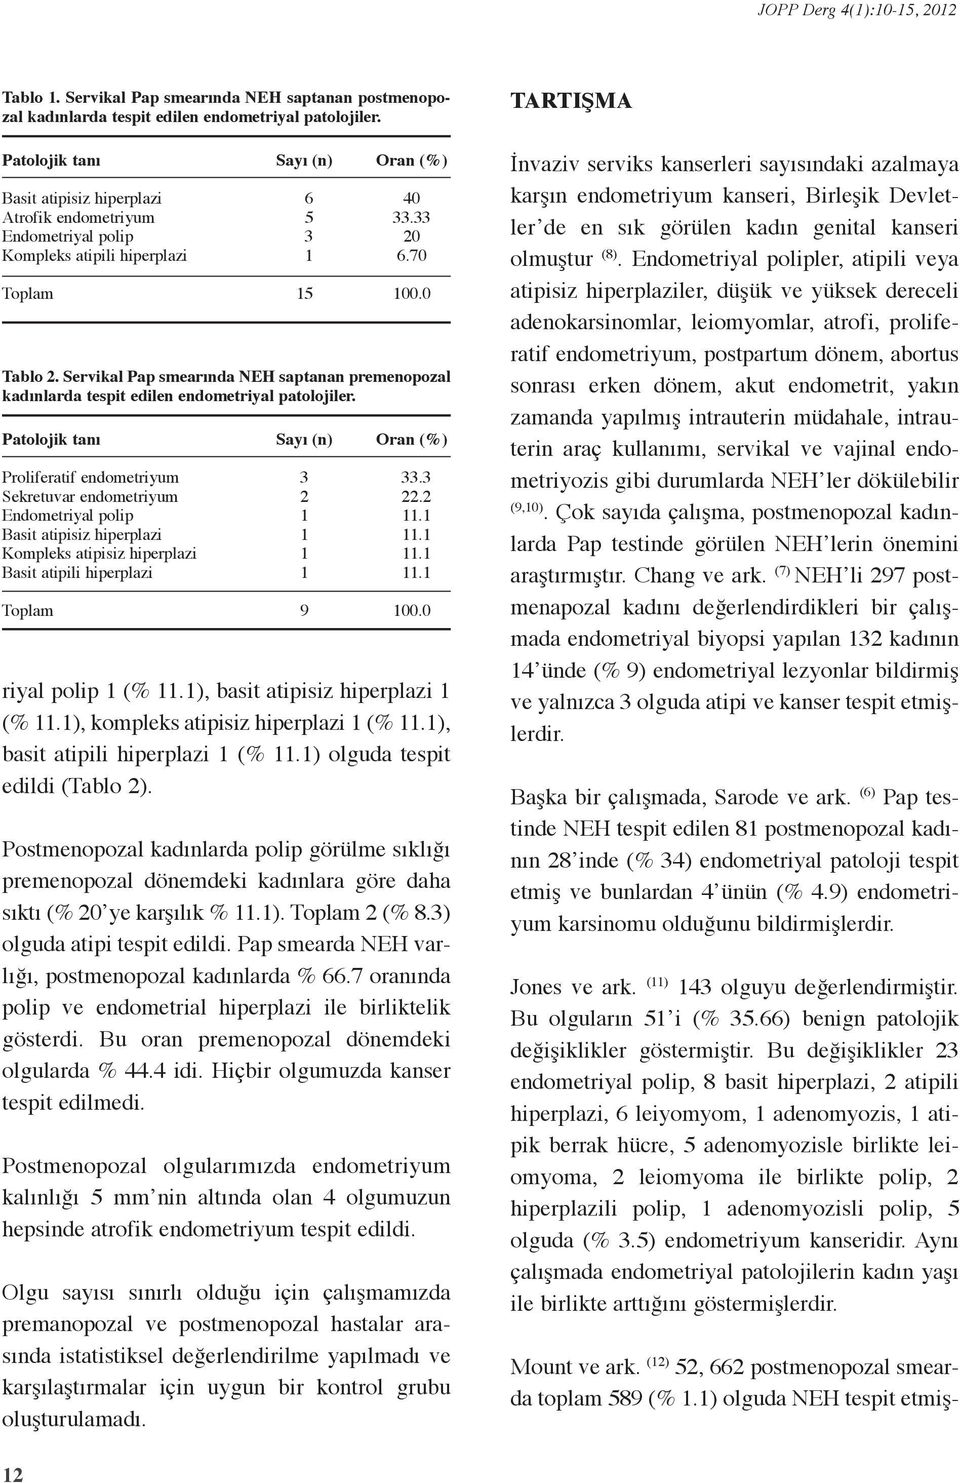 ), kompleks atipisiz hiperplazi (%.), basit atipili hiperplazi (%.) olguda tespit edildi (Tablo 2).